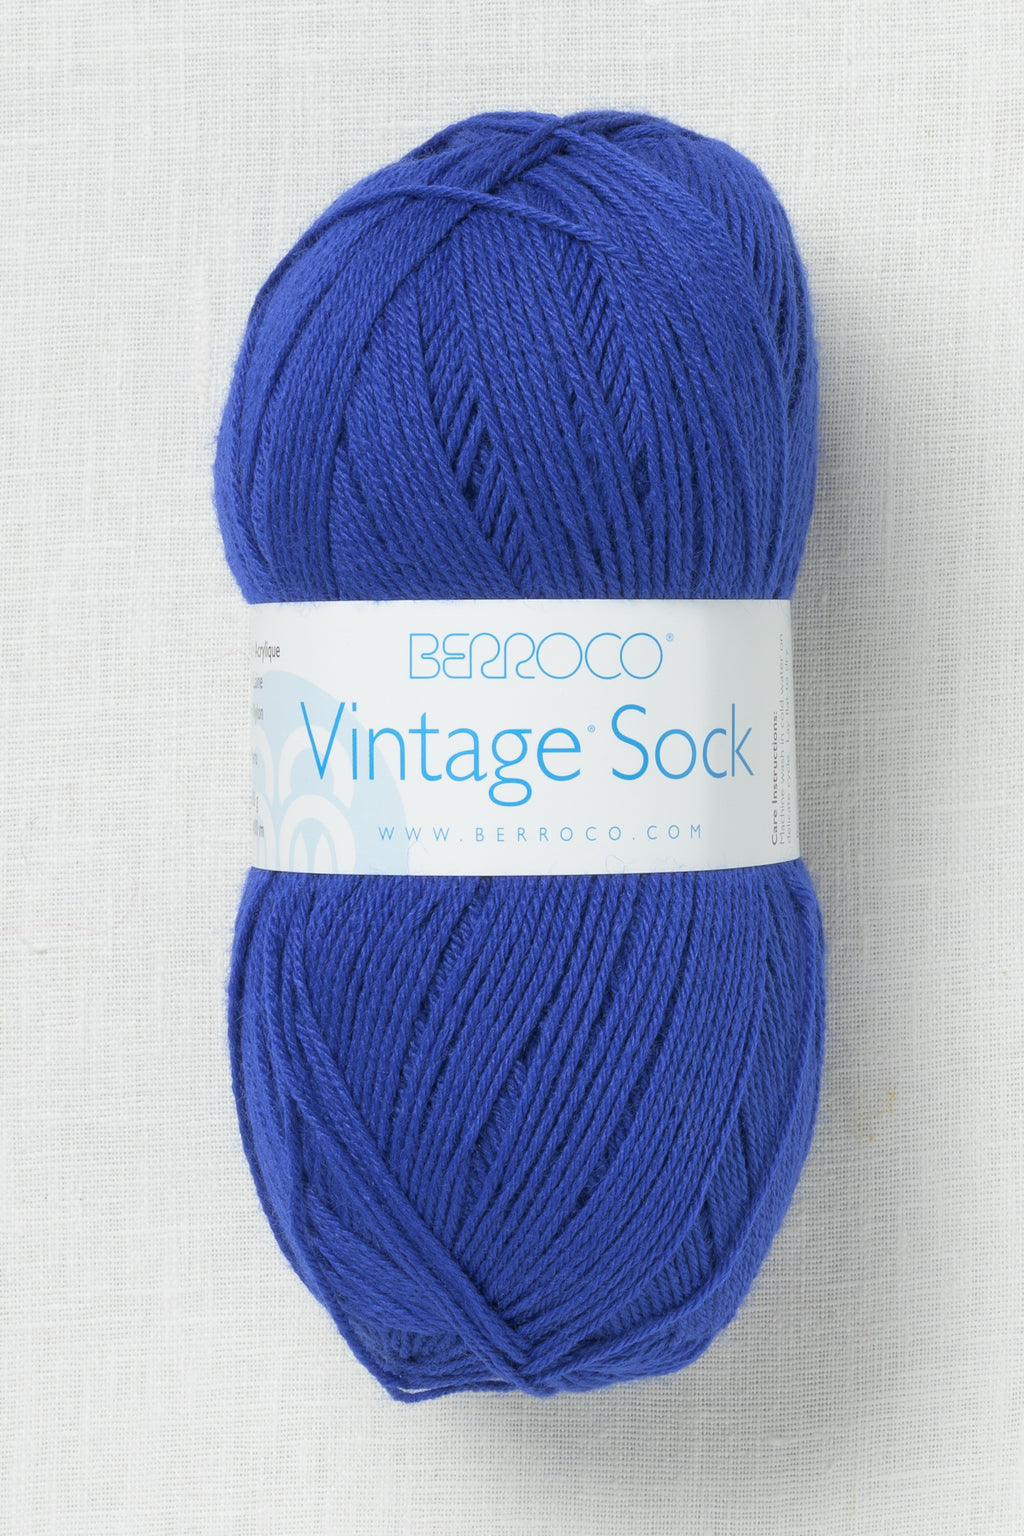 Berroco Vintage Sock 12160 Wild Blueberry